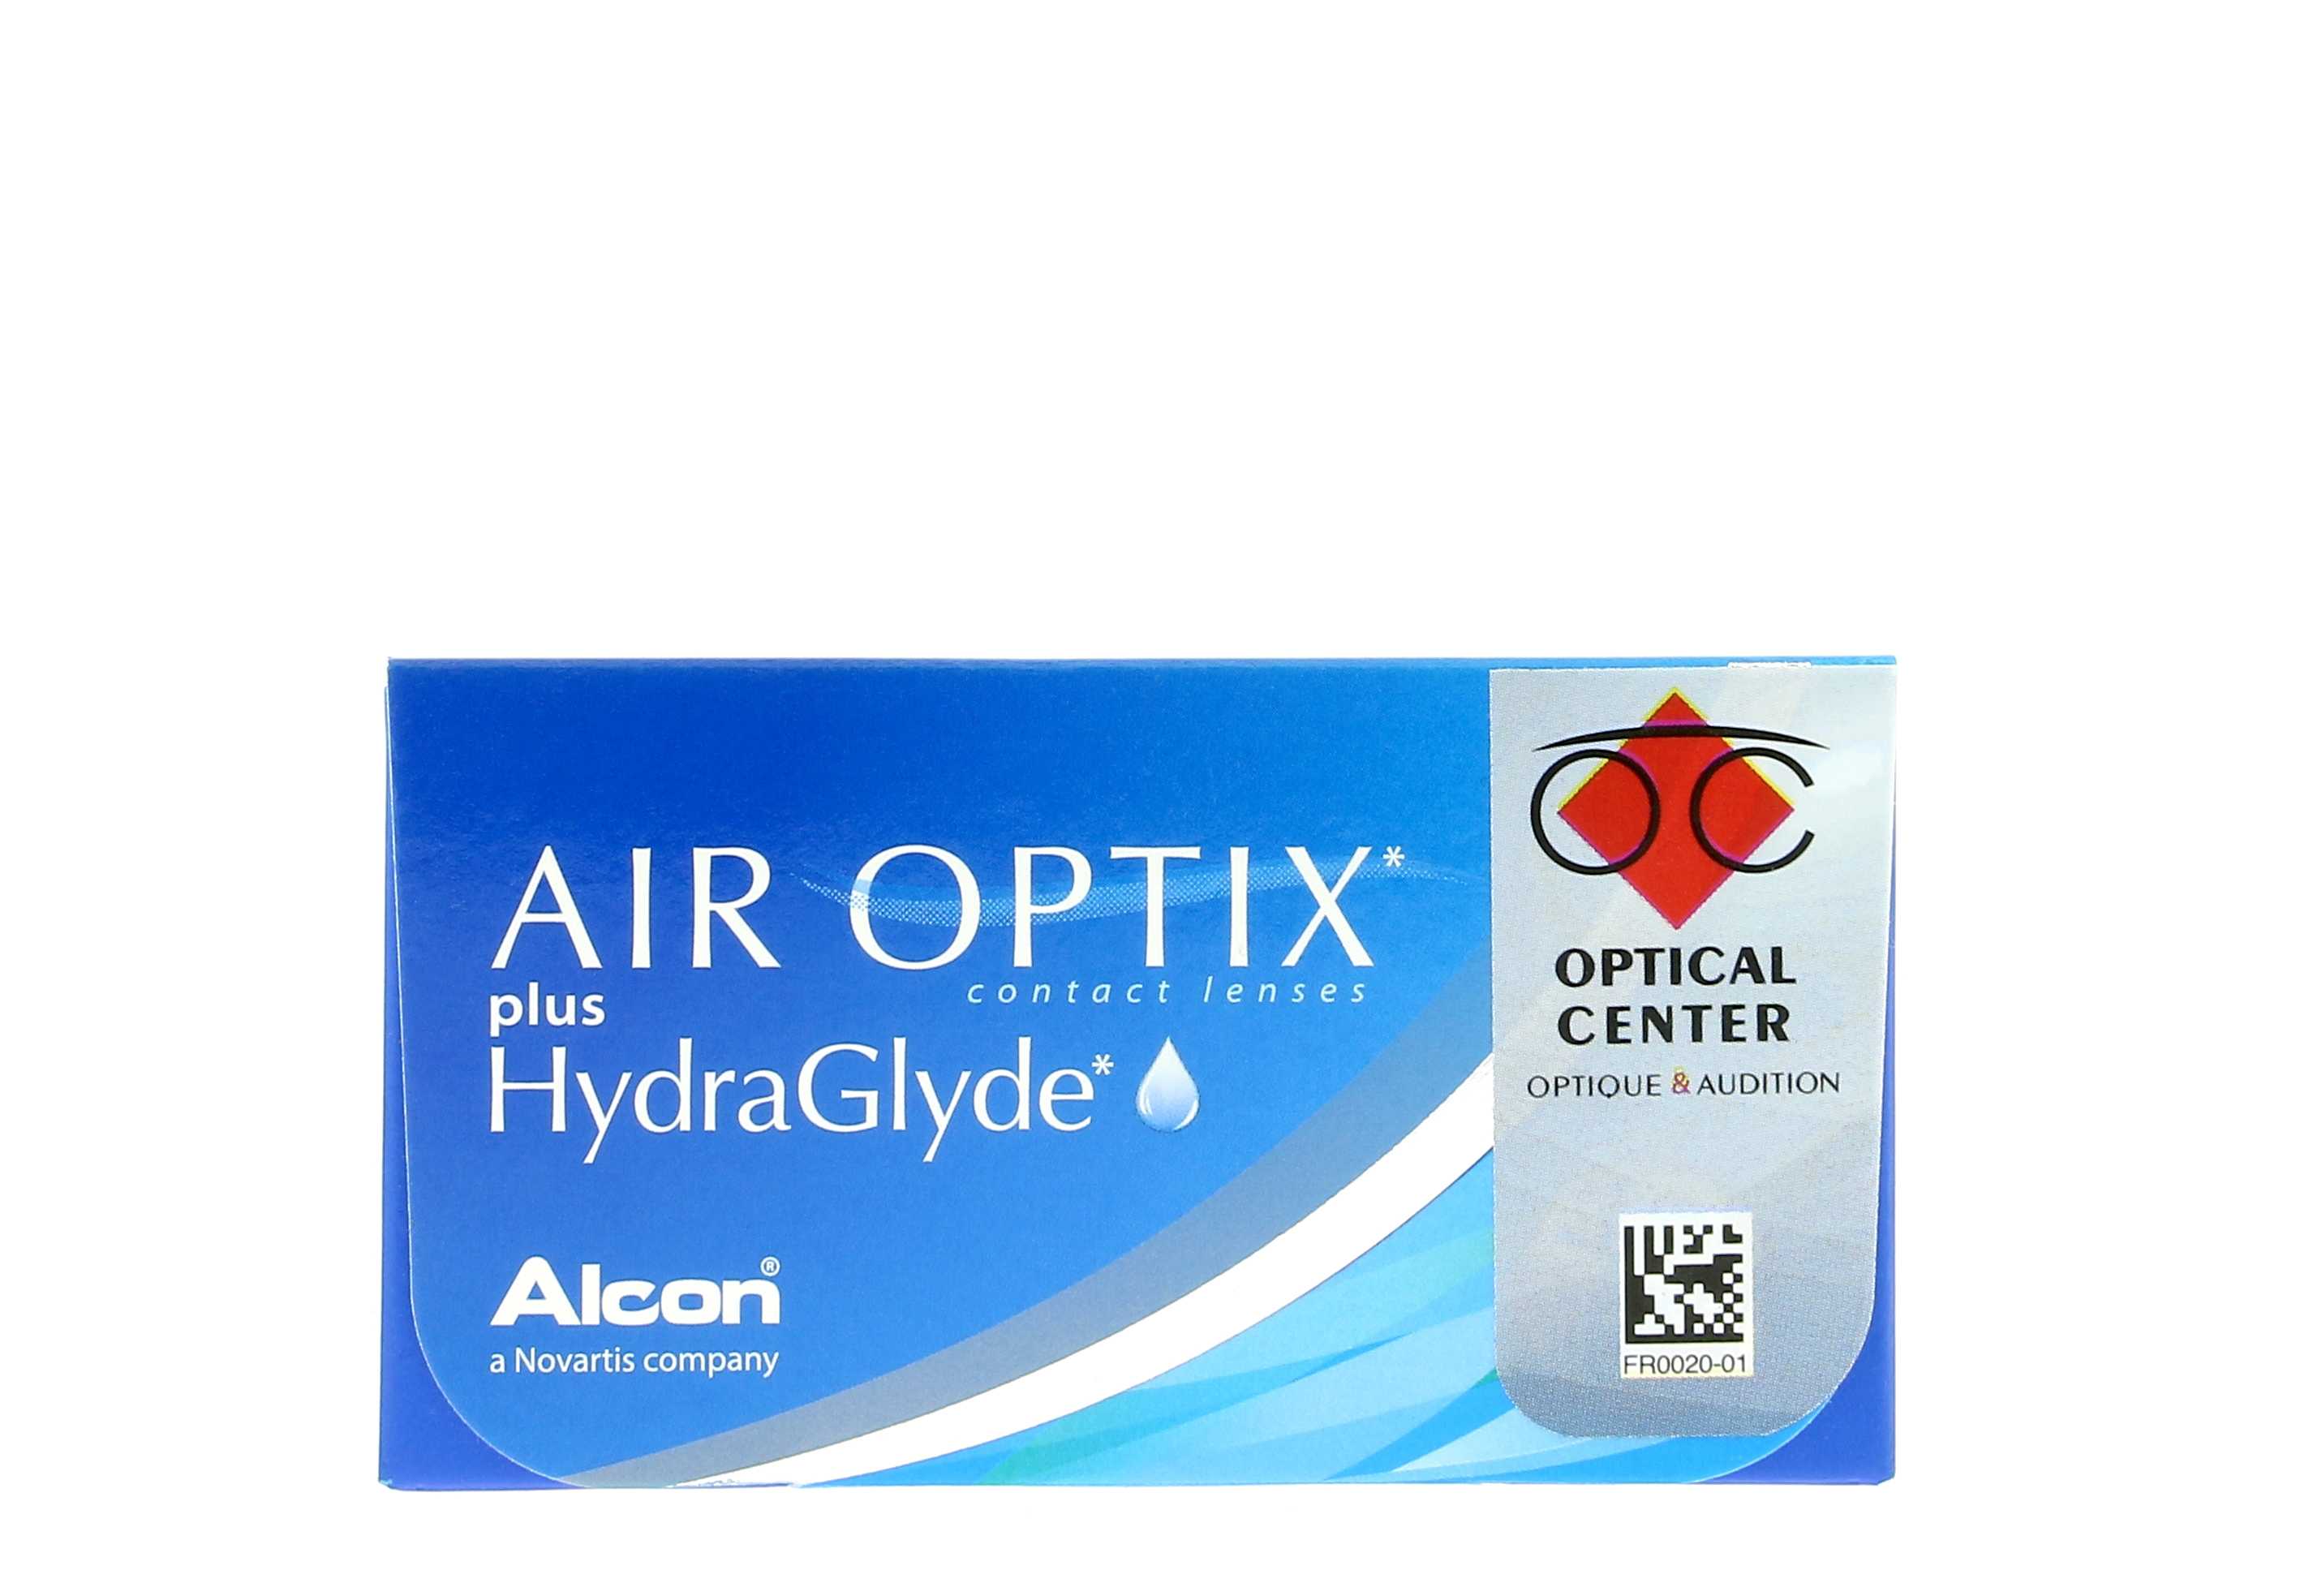  AIR OPTIX PLUS HYDRAGLYDE ALCON